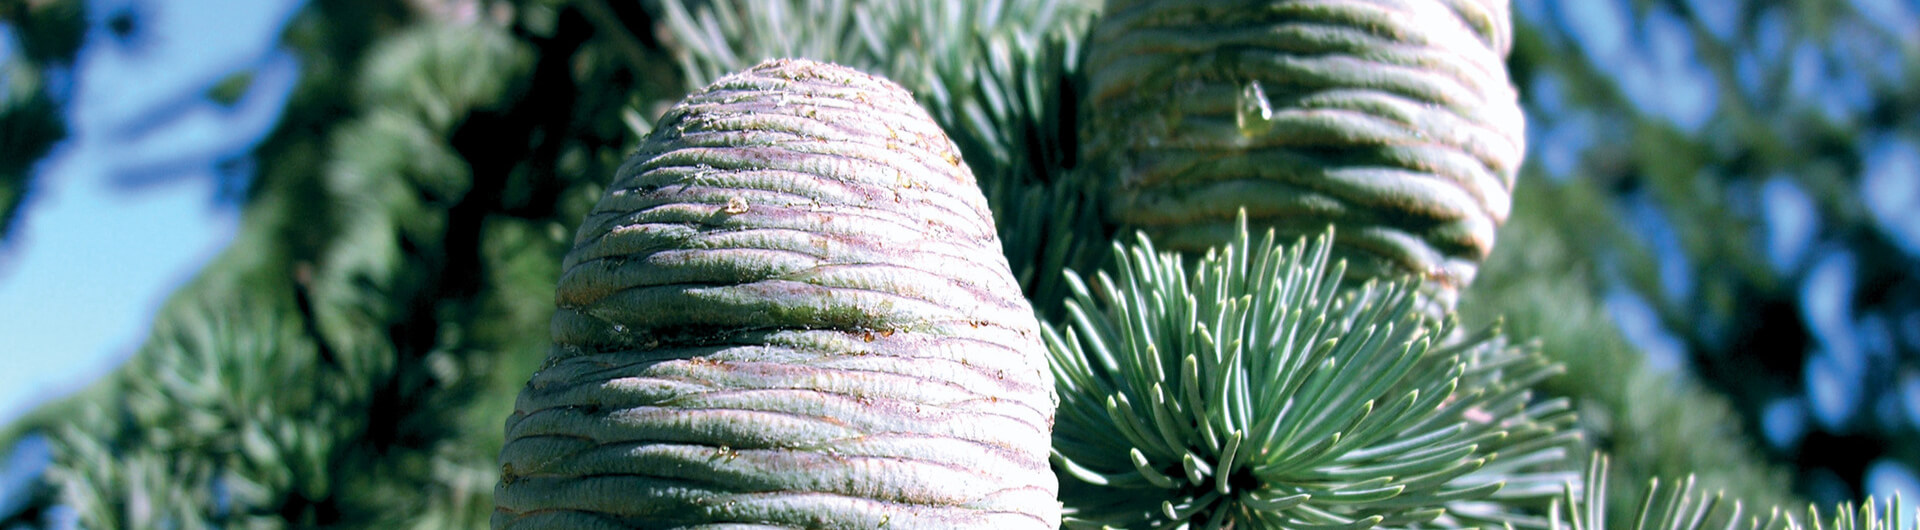 Topiaire (Plante taillée)- CEDRUS atlantica (Cèdre de l'Atlas)